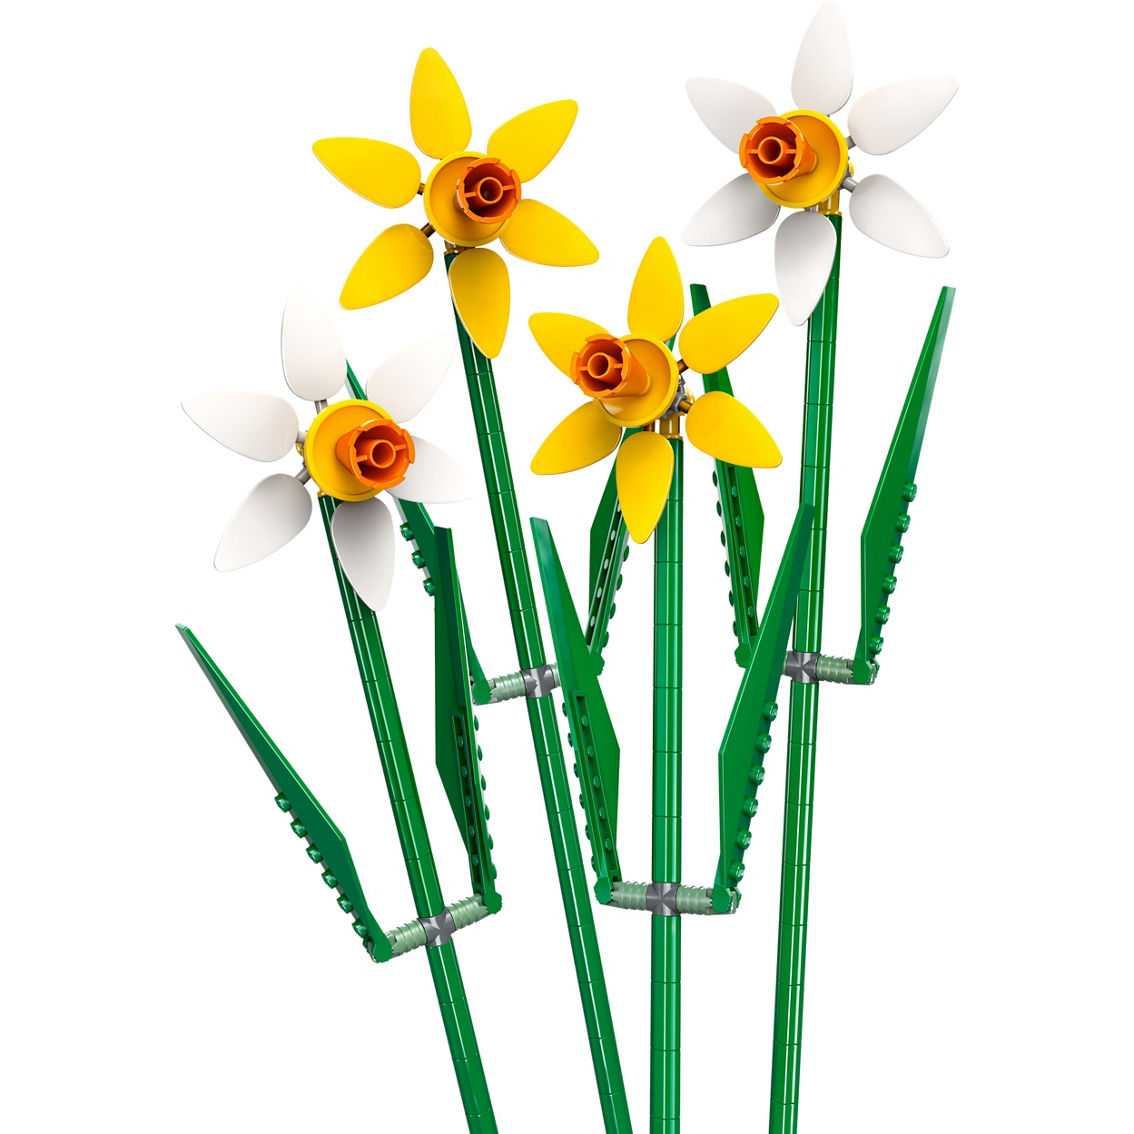 LEGO Daffodils 40747 - Image 4 of 10